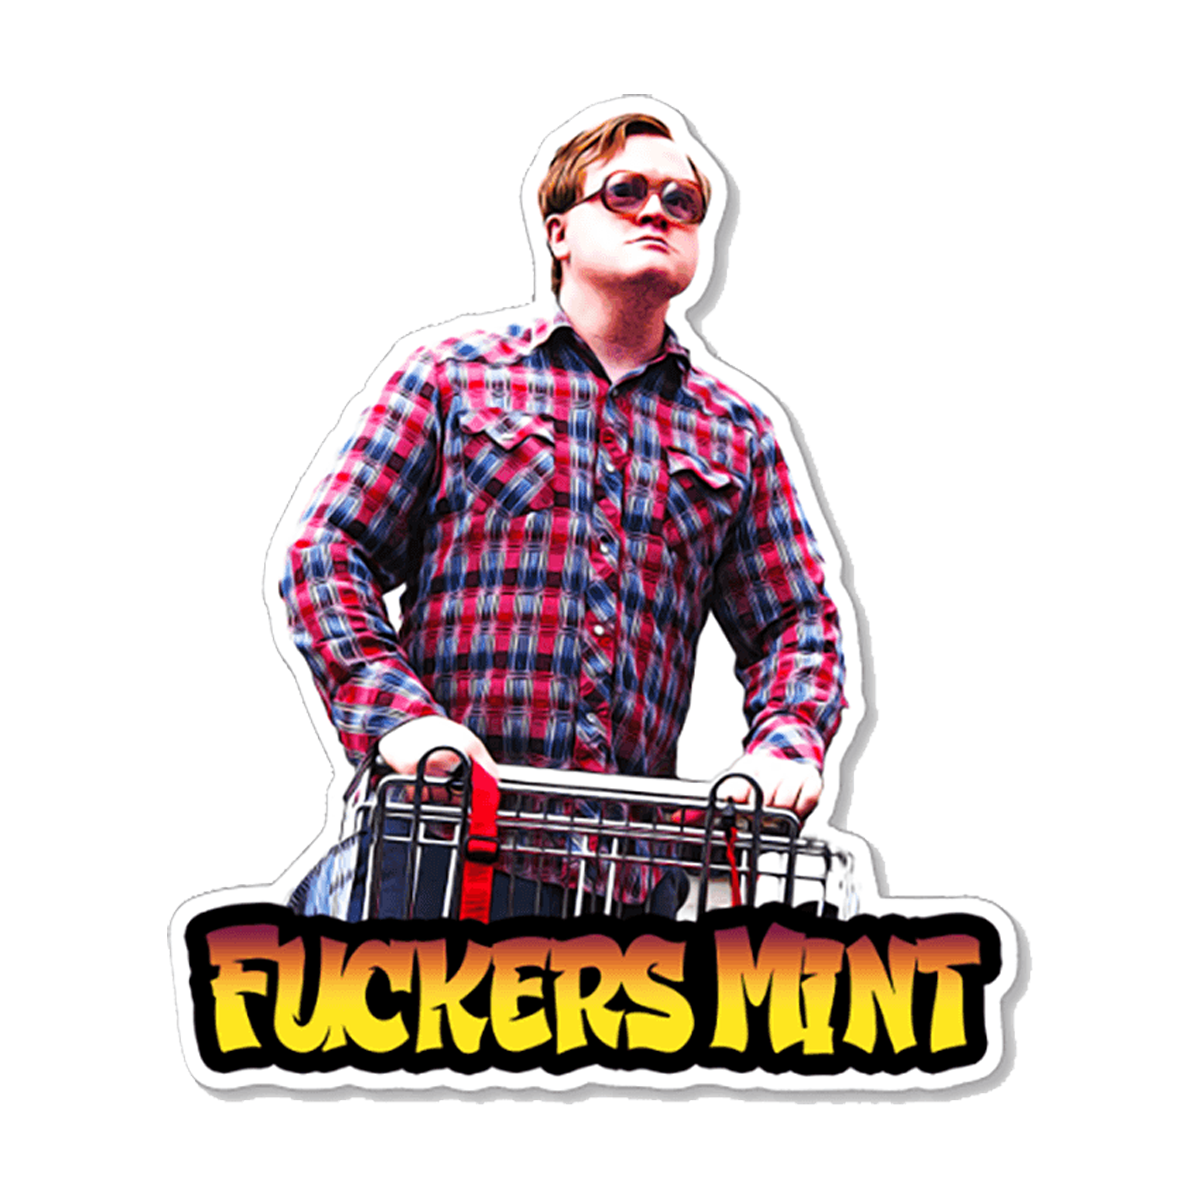 Trailer Park Boys Fucker's Mint Sticker | Officially Licensed Bubbles Fuckers Mint Sticker | Trailer Park Boys Bubbles With A Grocery Cart